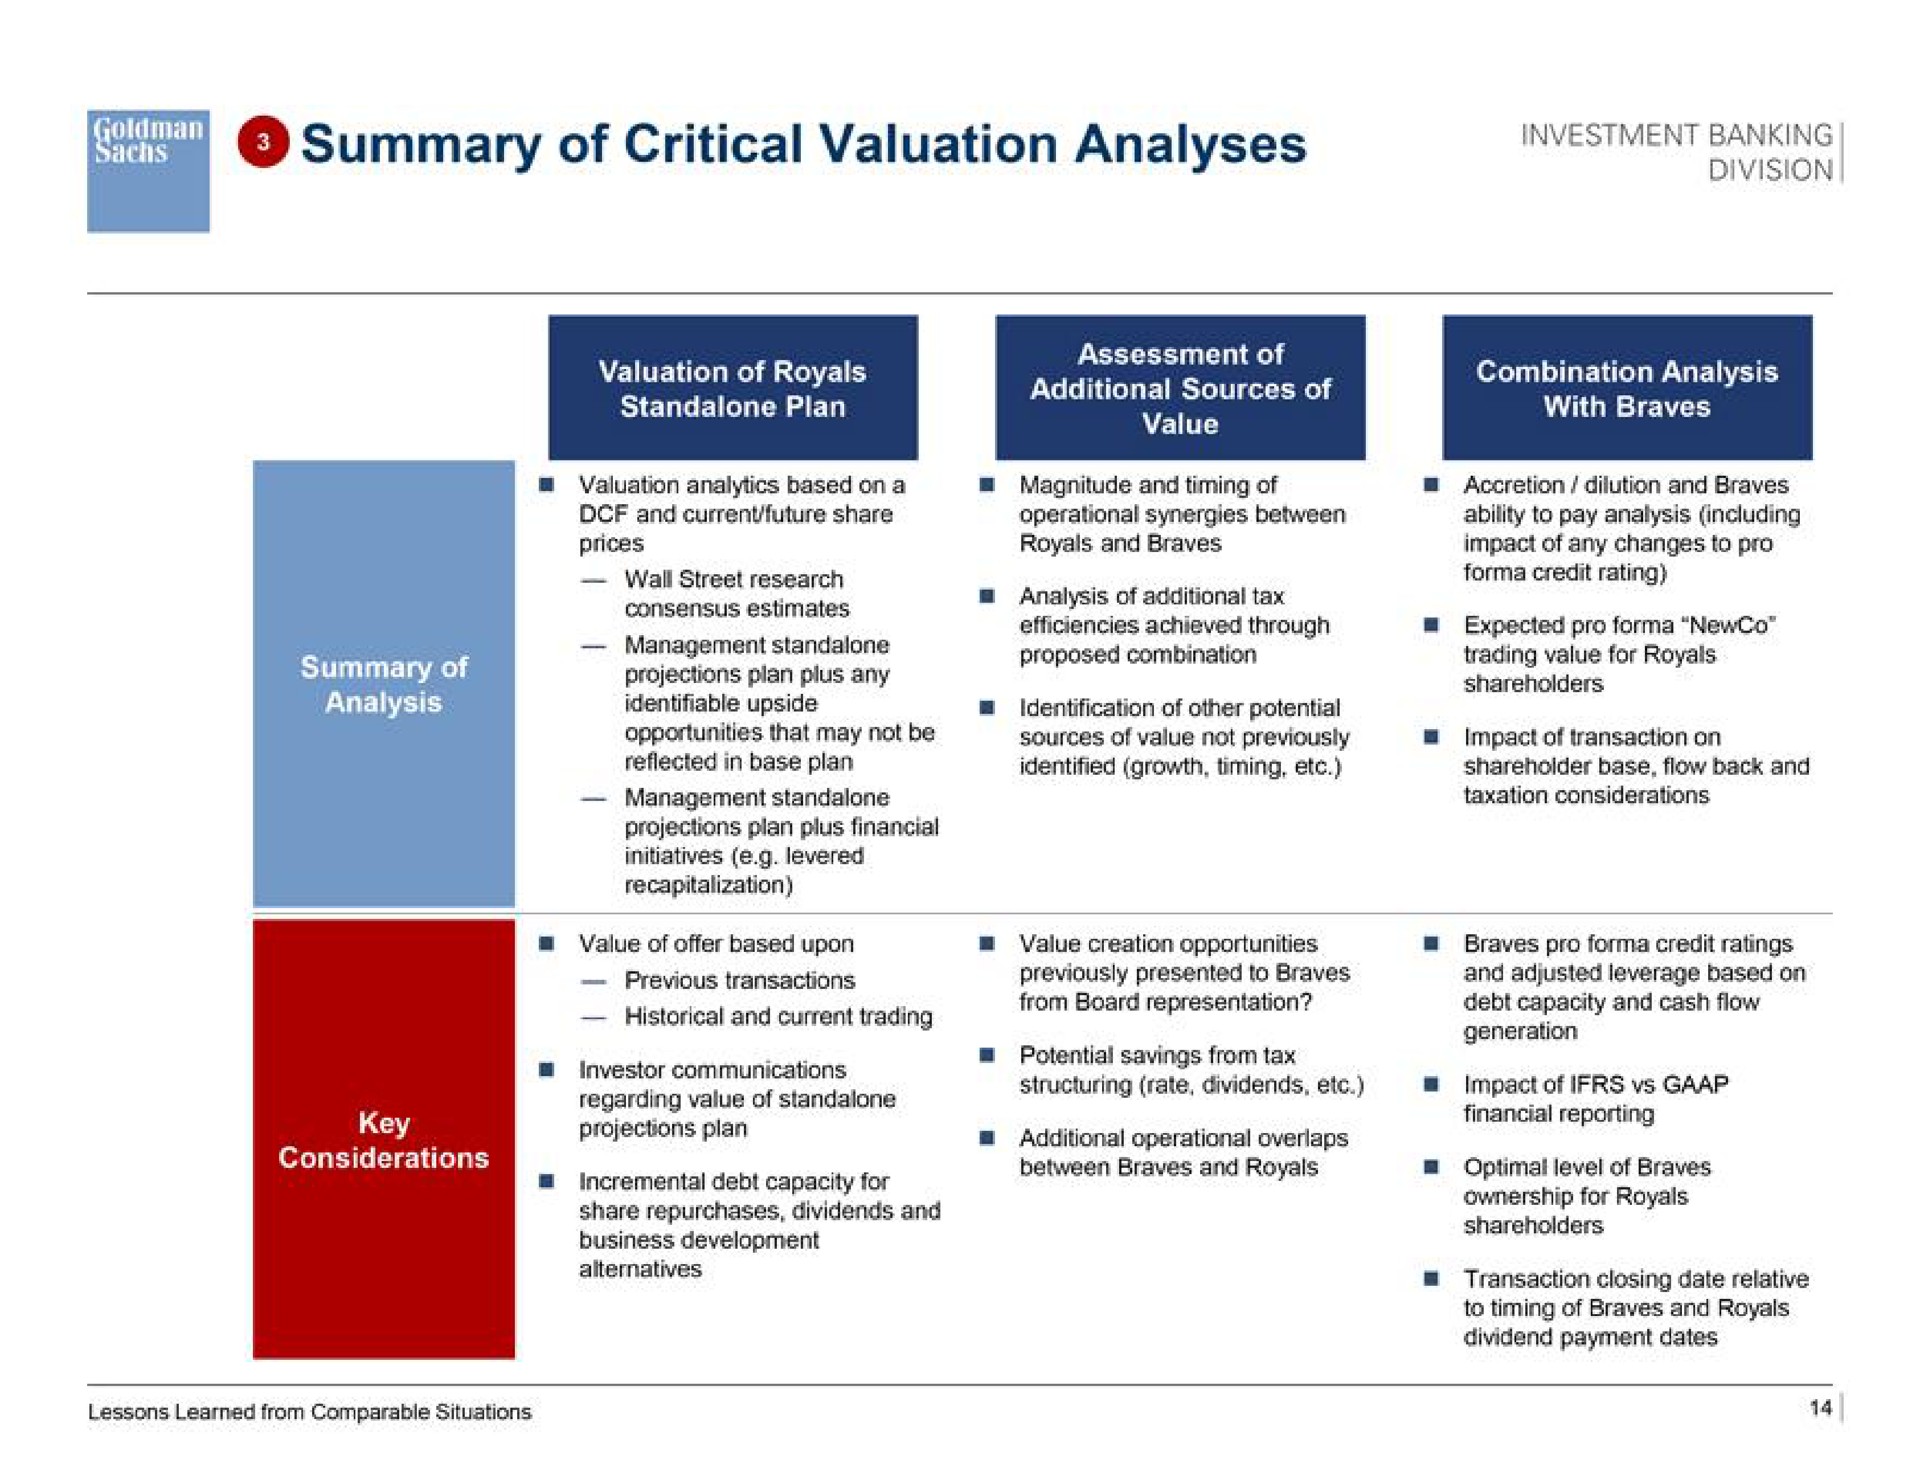 summary of critical valuation analyses | Goldman Sachs